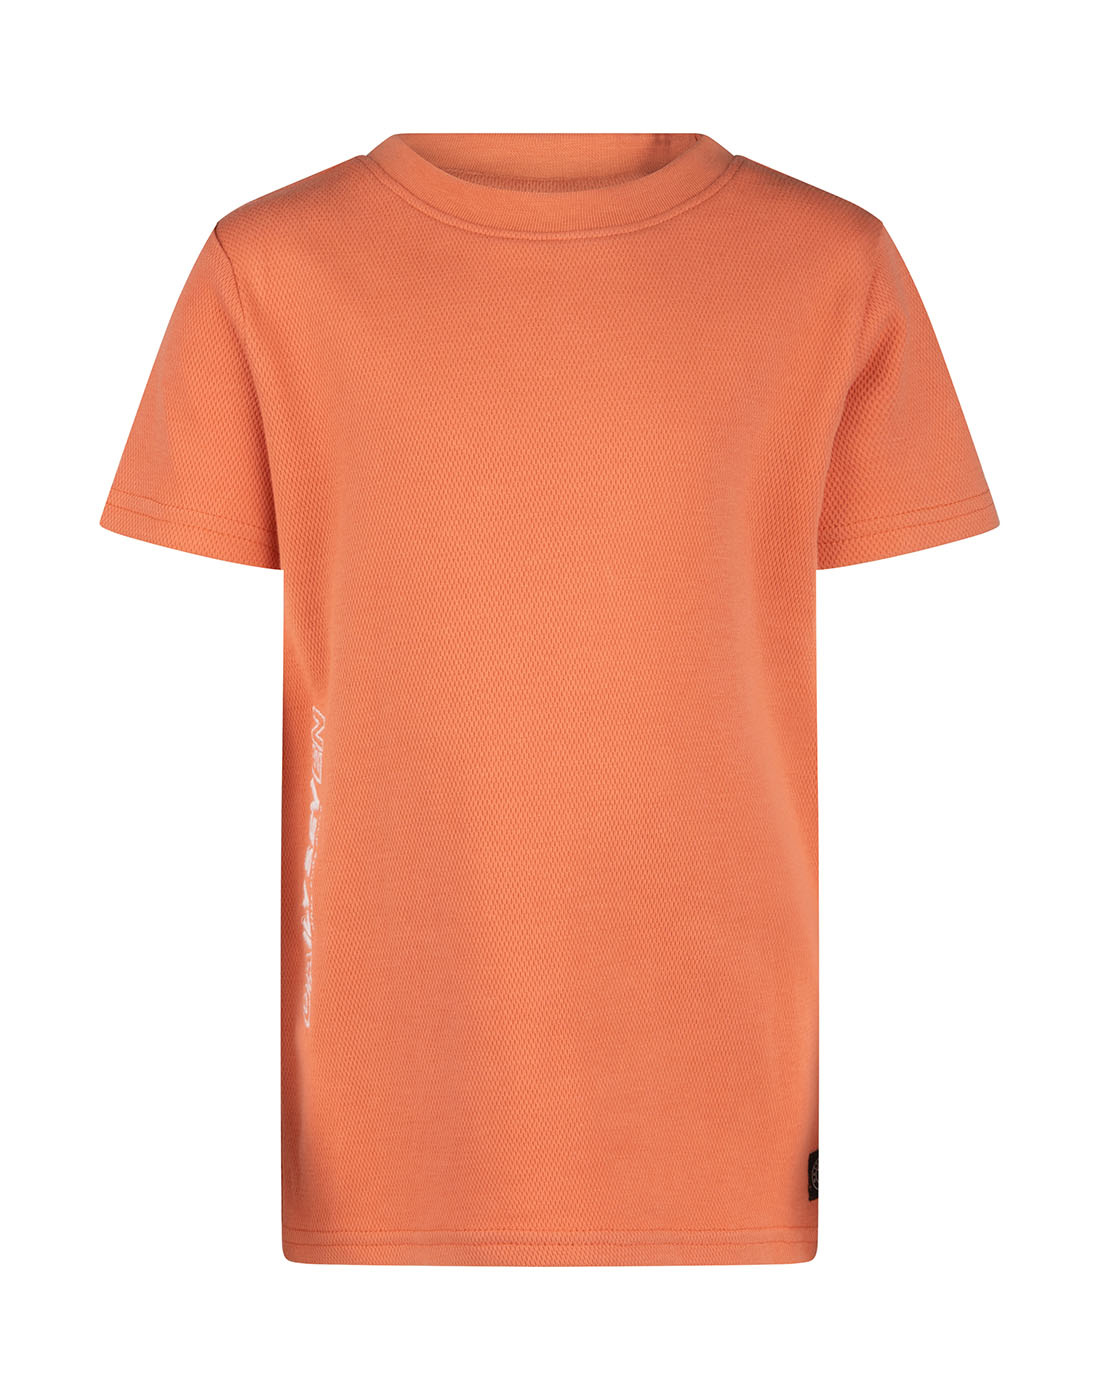 Daily7 Jongens t-shirt pique - Dusty Oranje